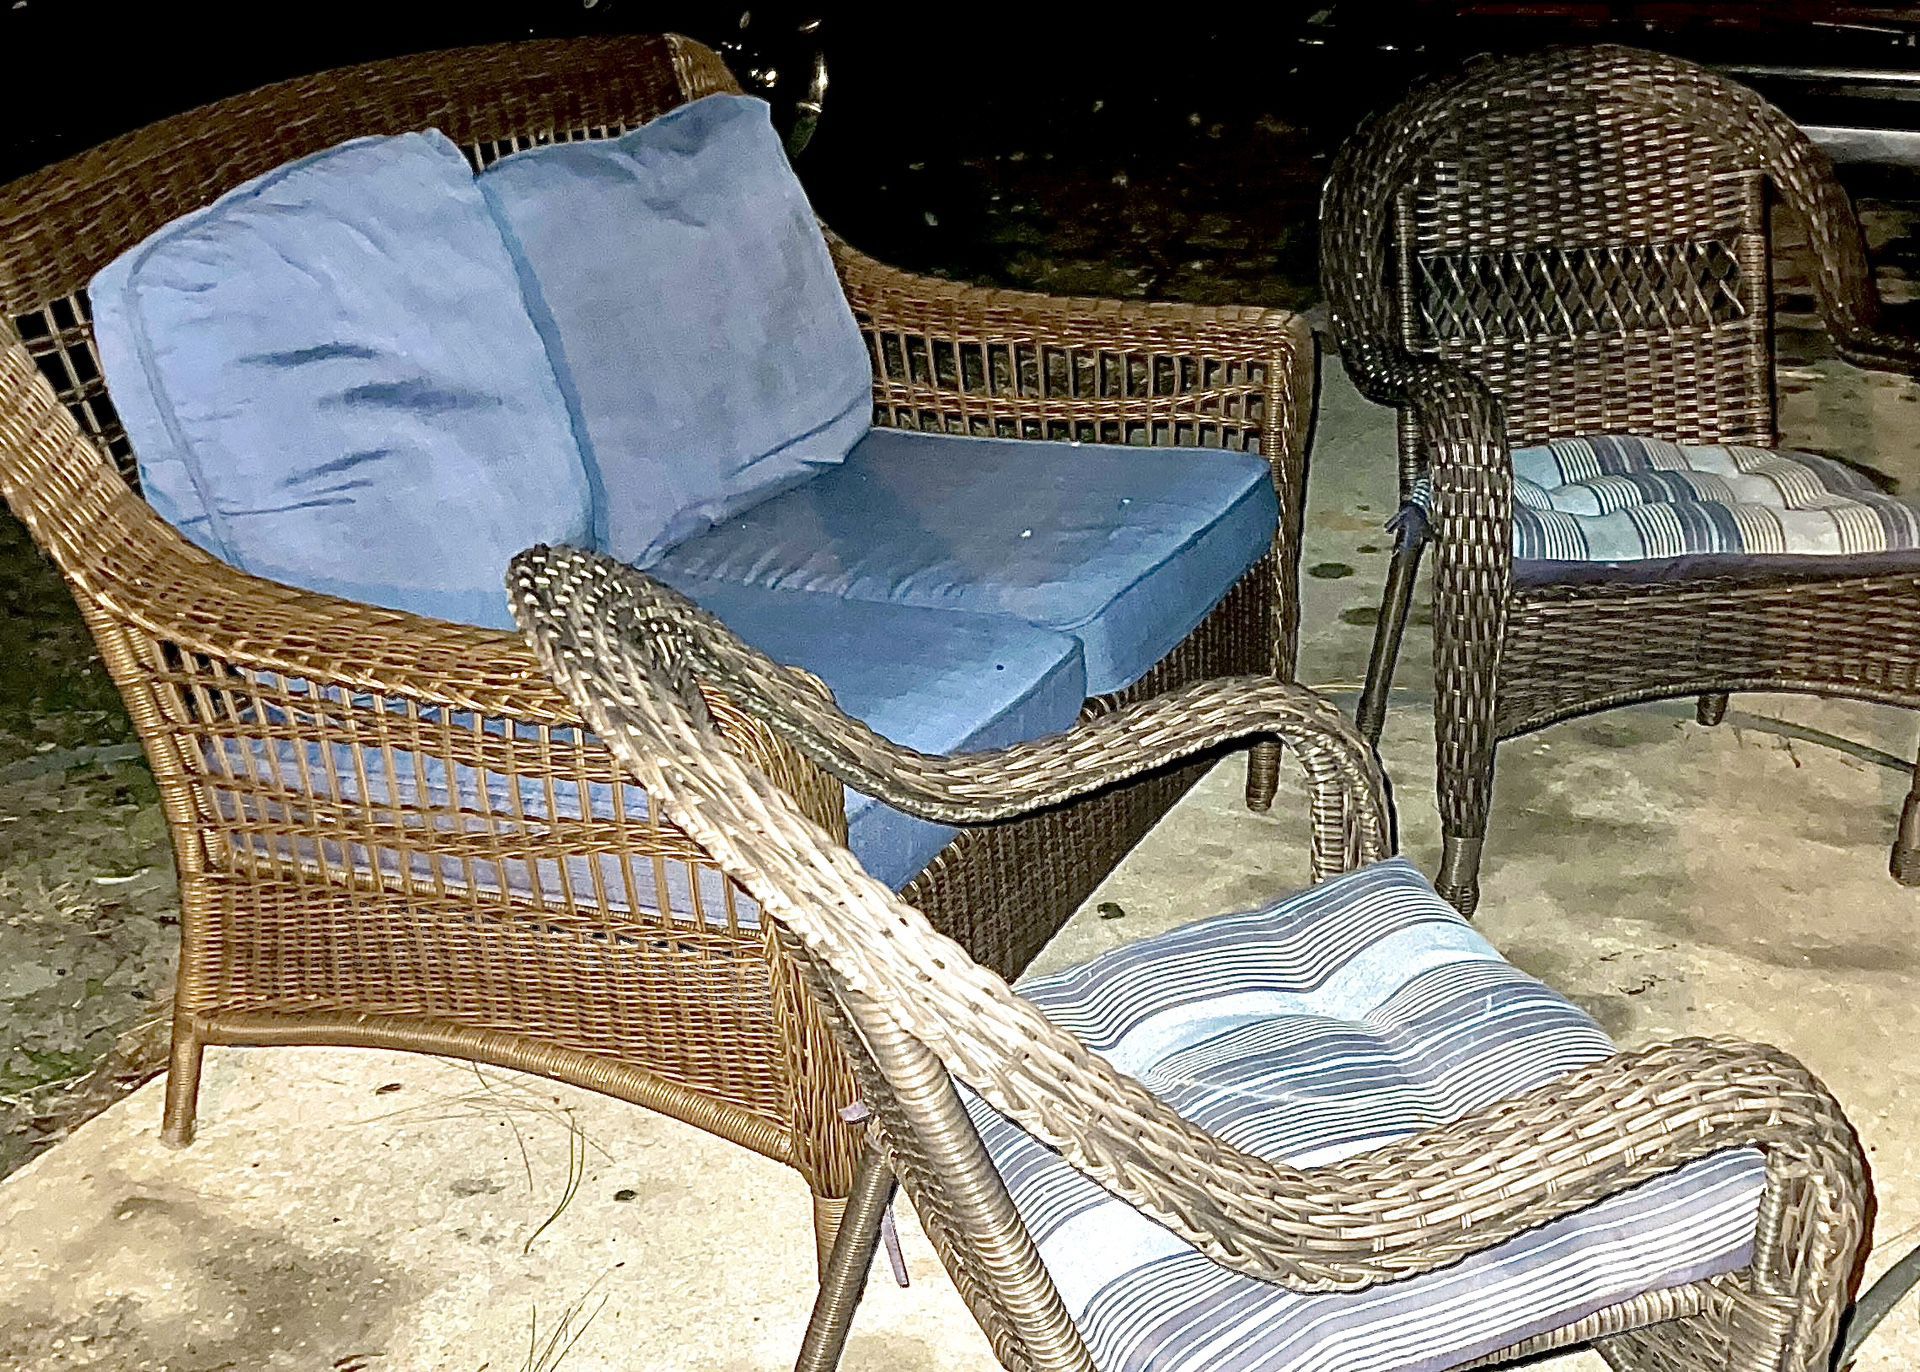 $250.00  Patio Couch & 2 Chairs  “Hampton Bay”